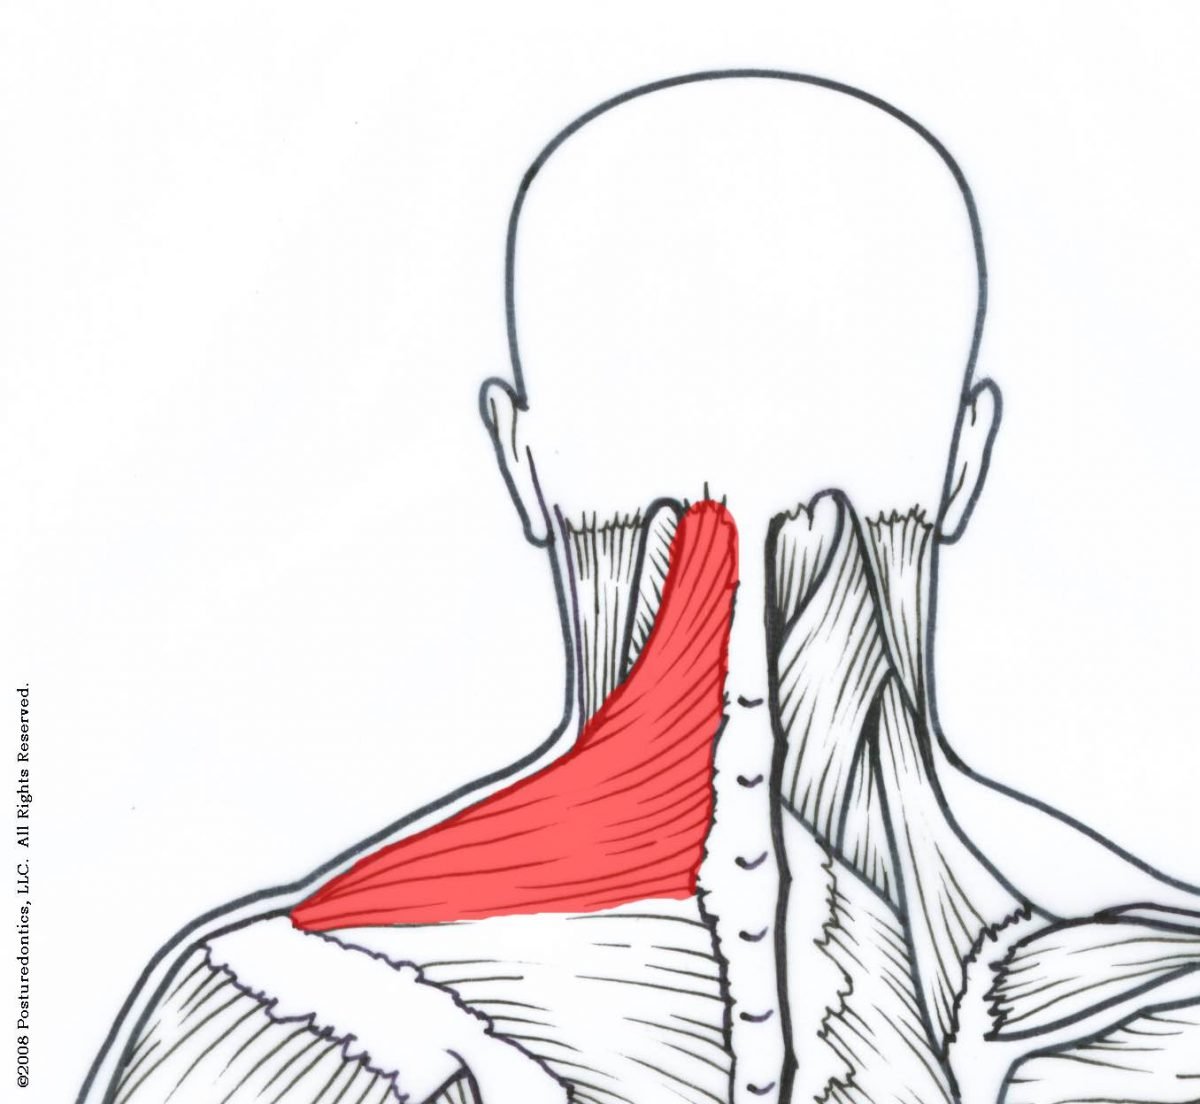 Широчайшая мышца спины анатомия